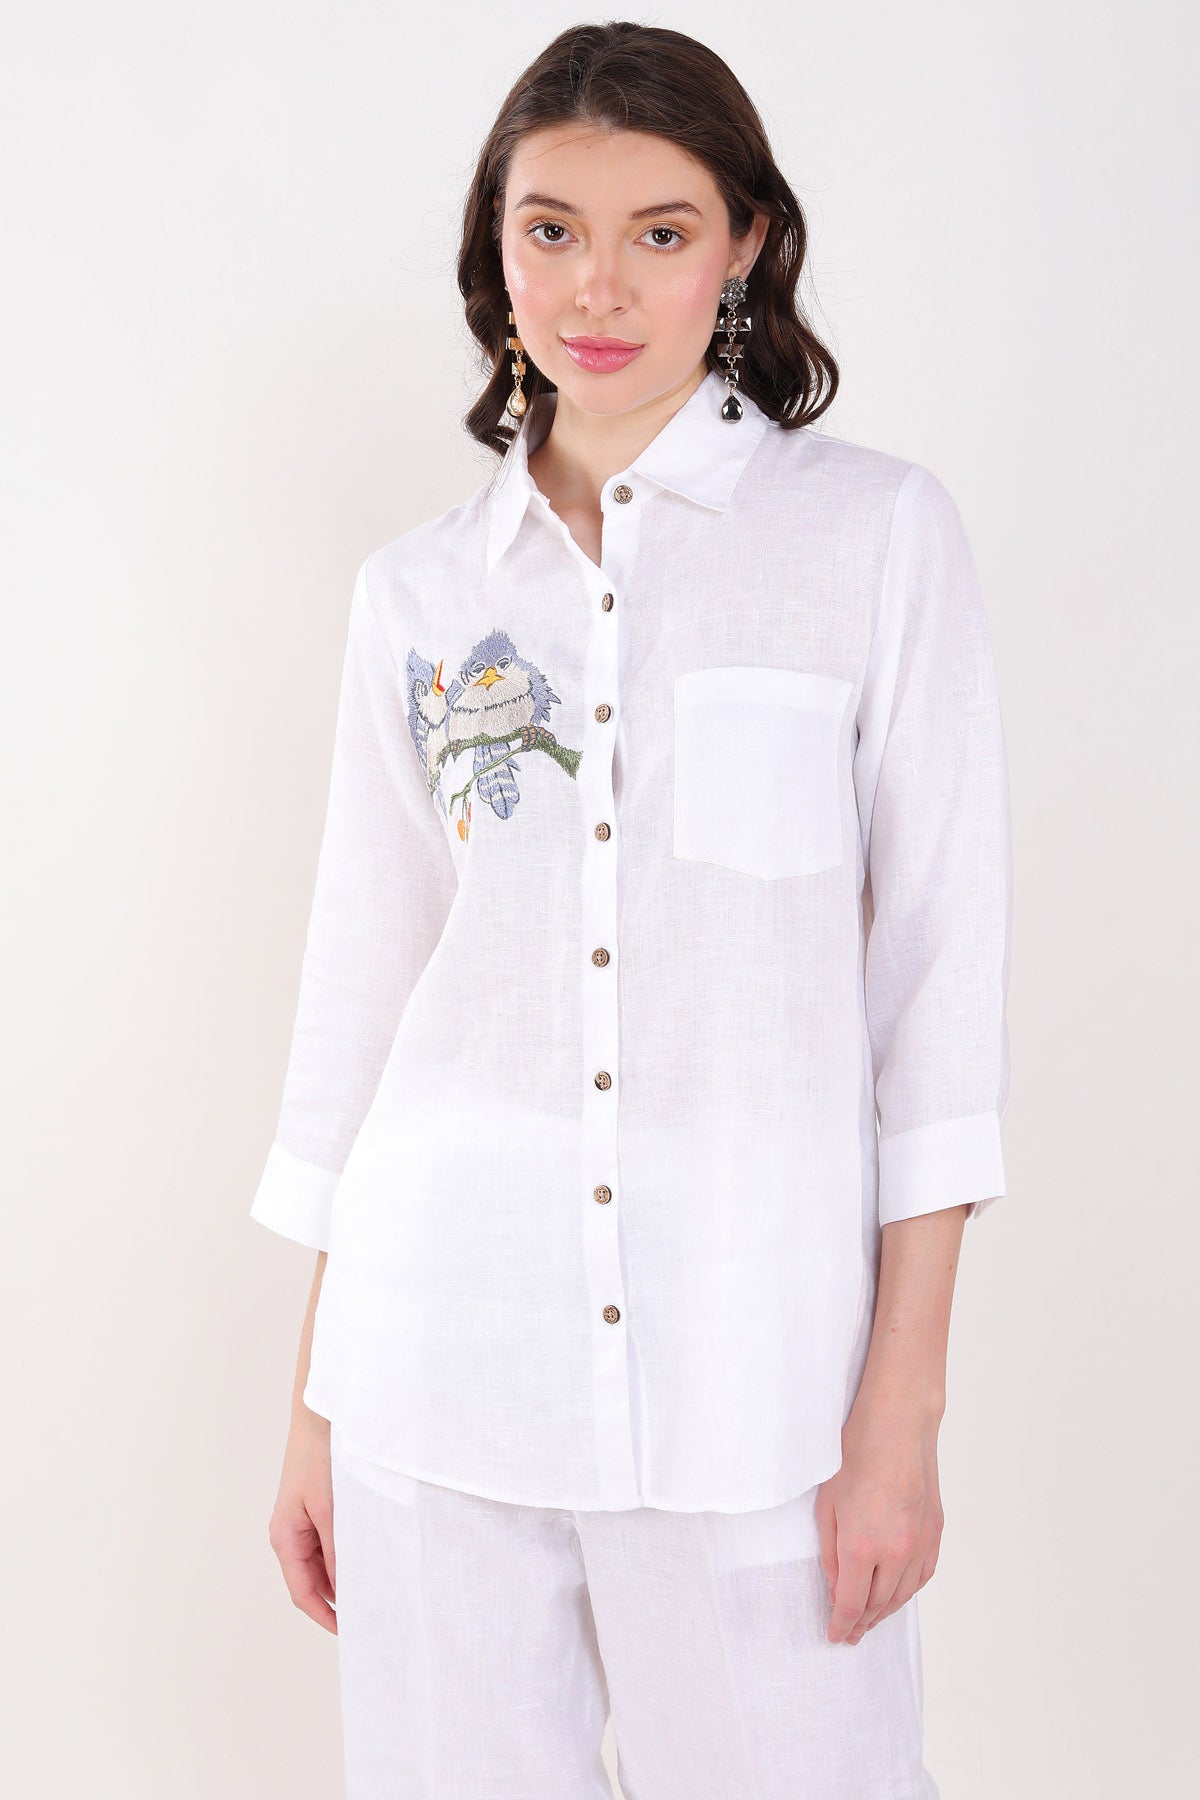 Linen Bloom White Bird Embroidered Shirt for women online at ScrollnShops